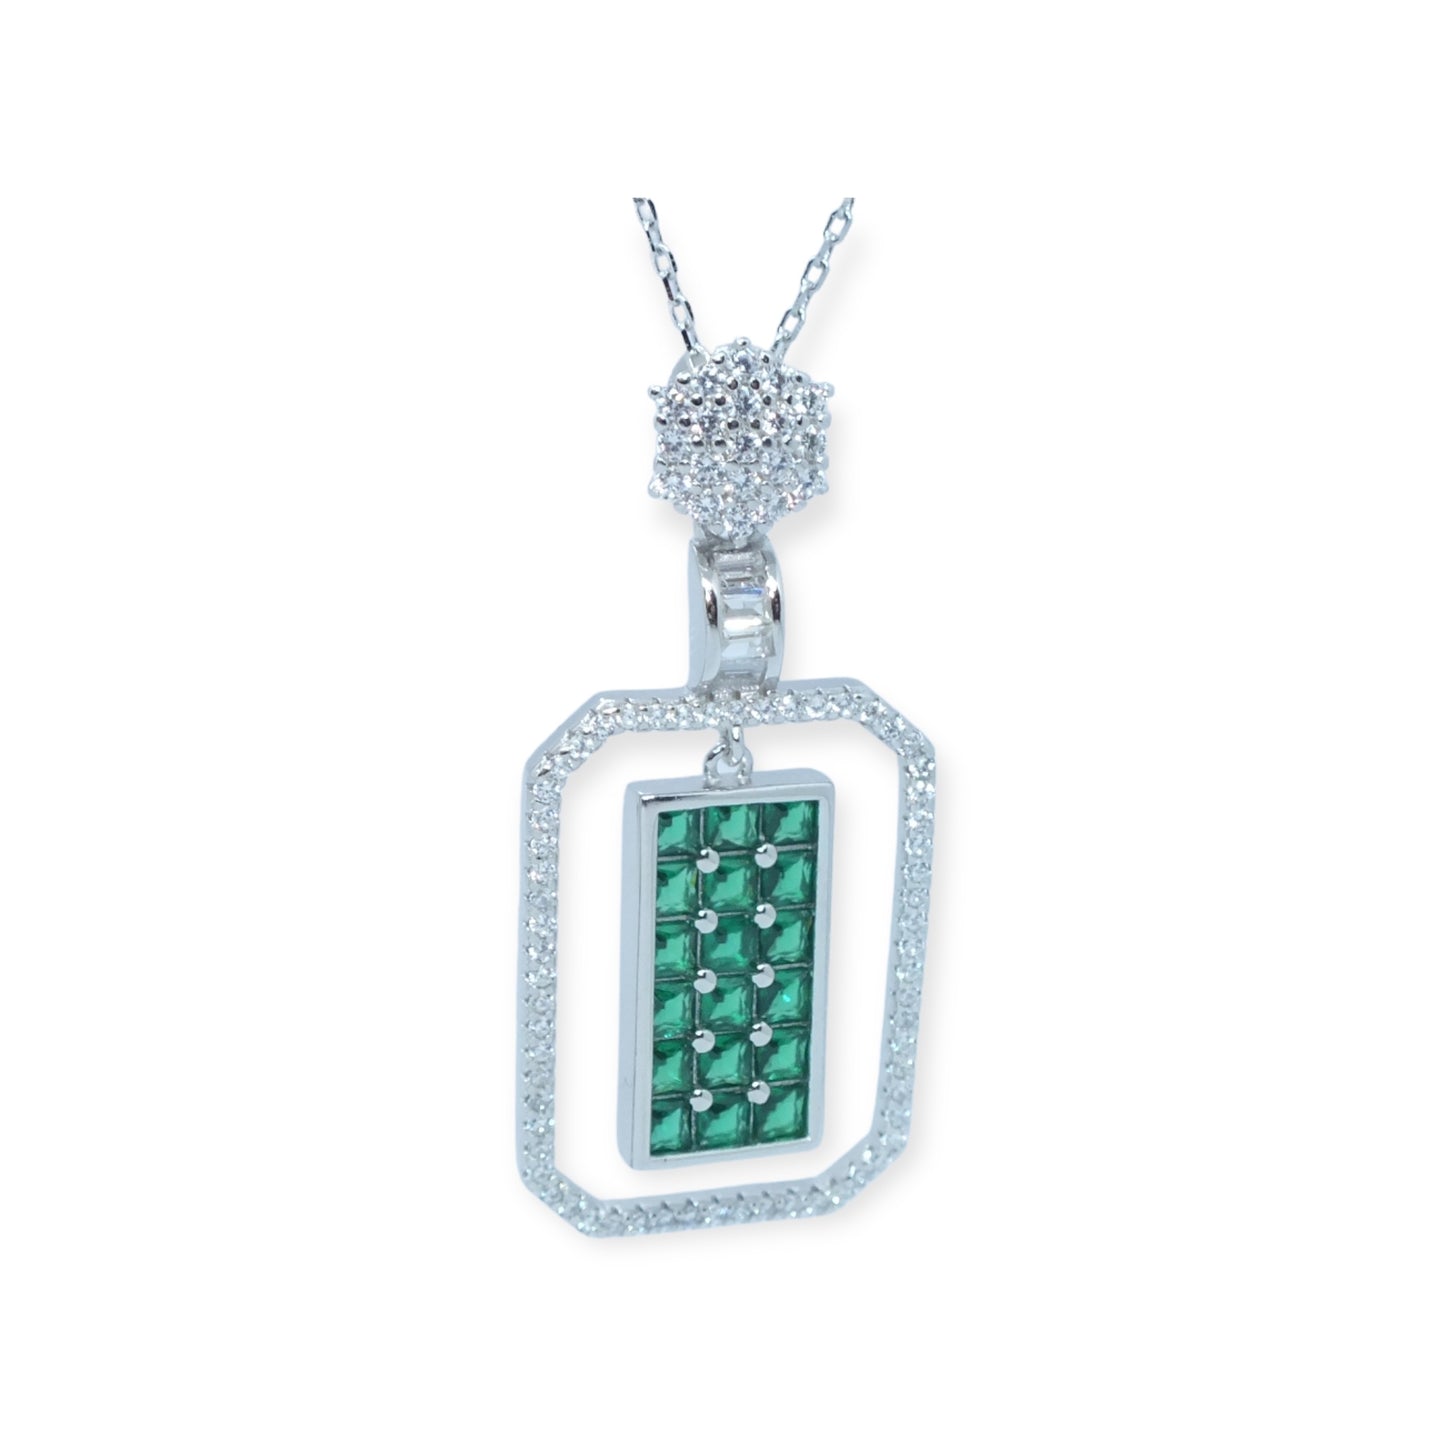 Silver Necklace With Green Stones- سلسال فضة بأحجار خضراء